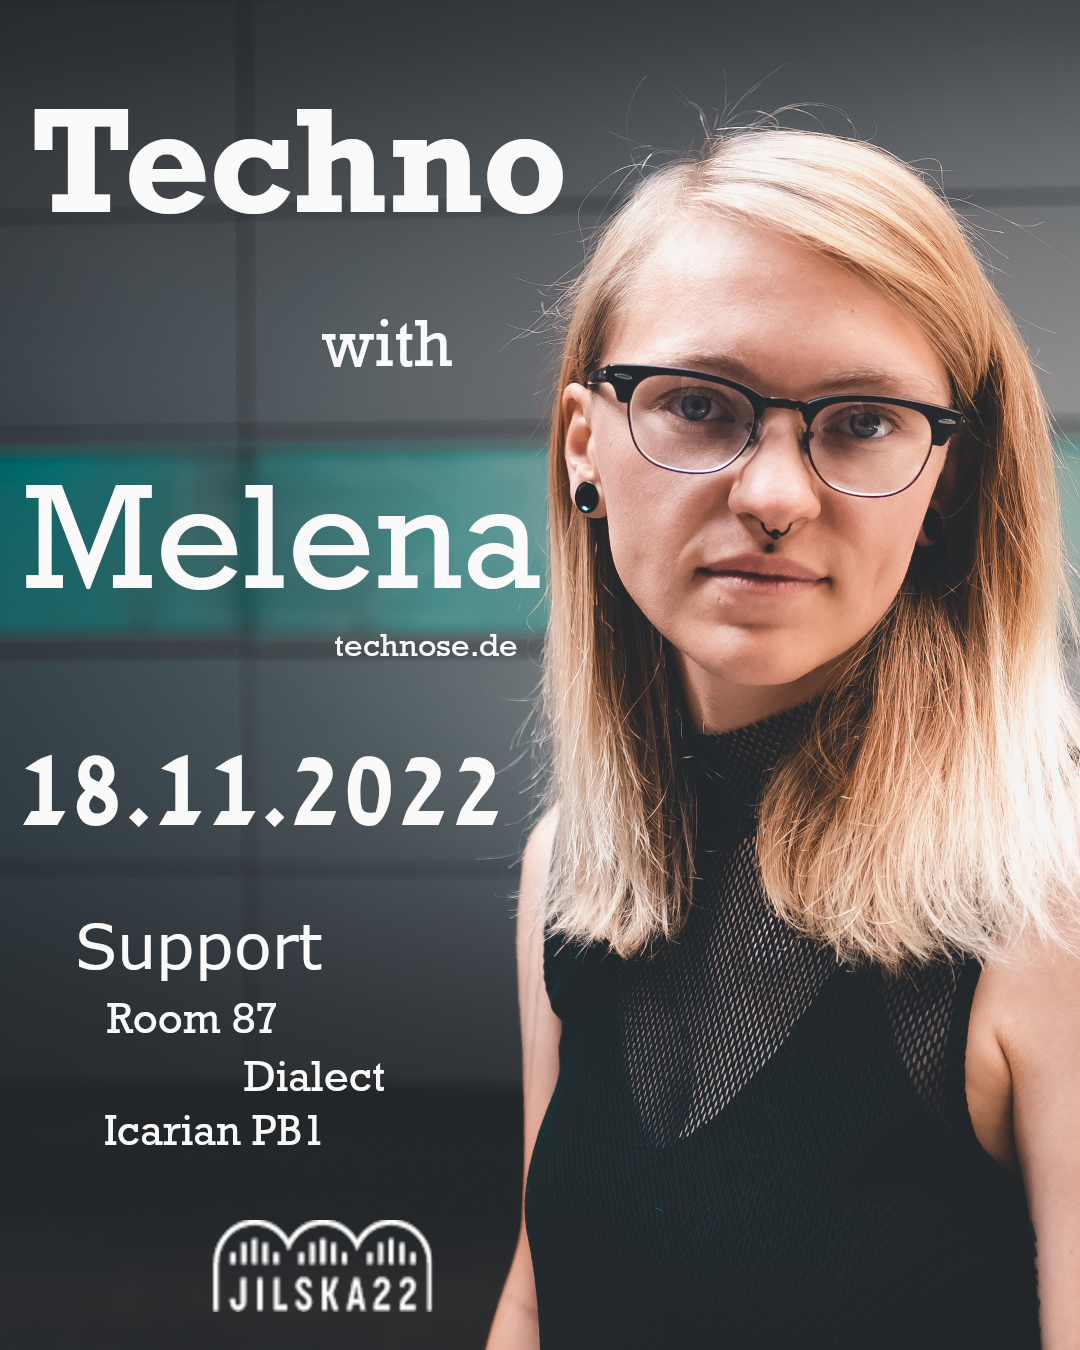 Techno with Melena (technose.de) - Página trasera